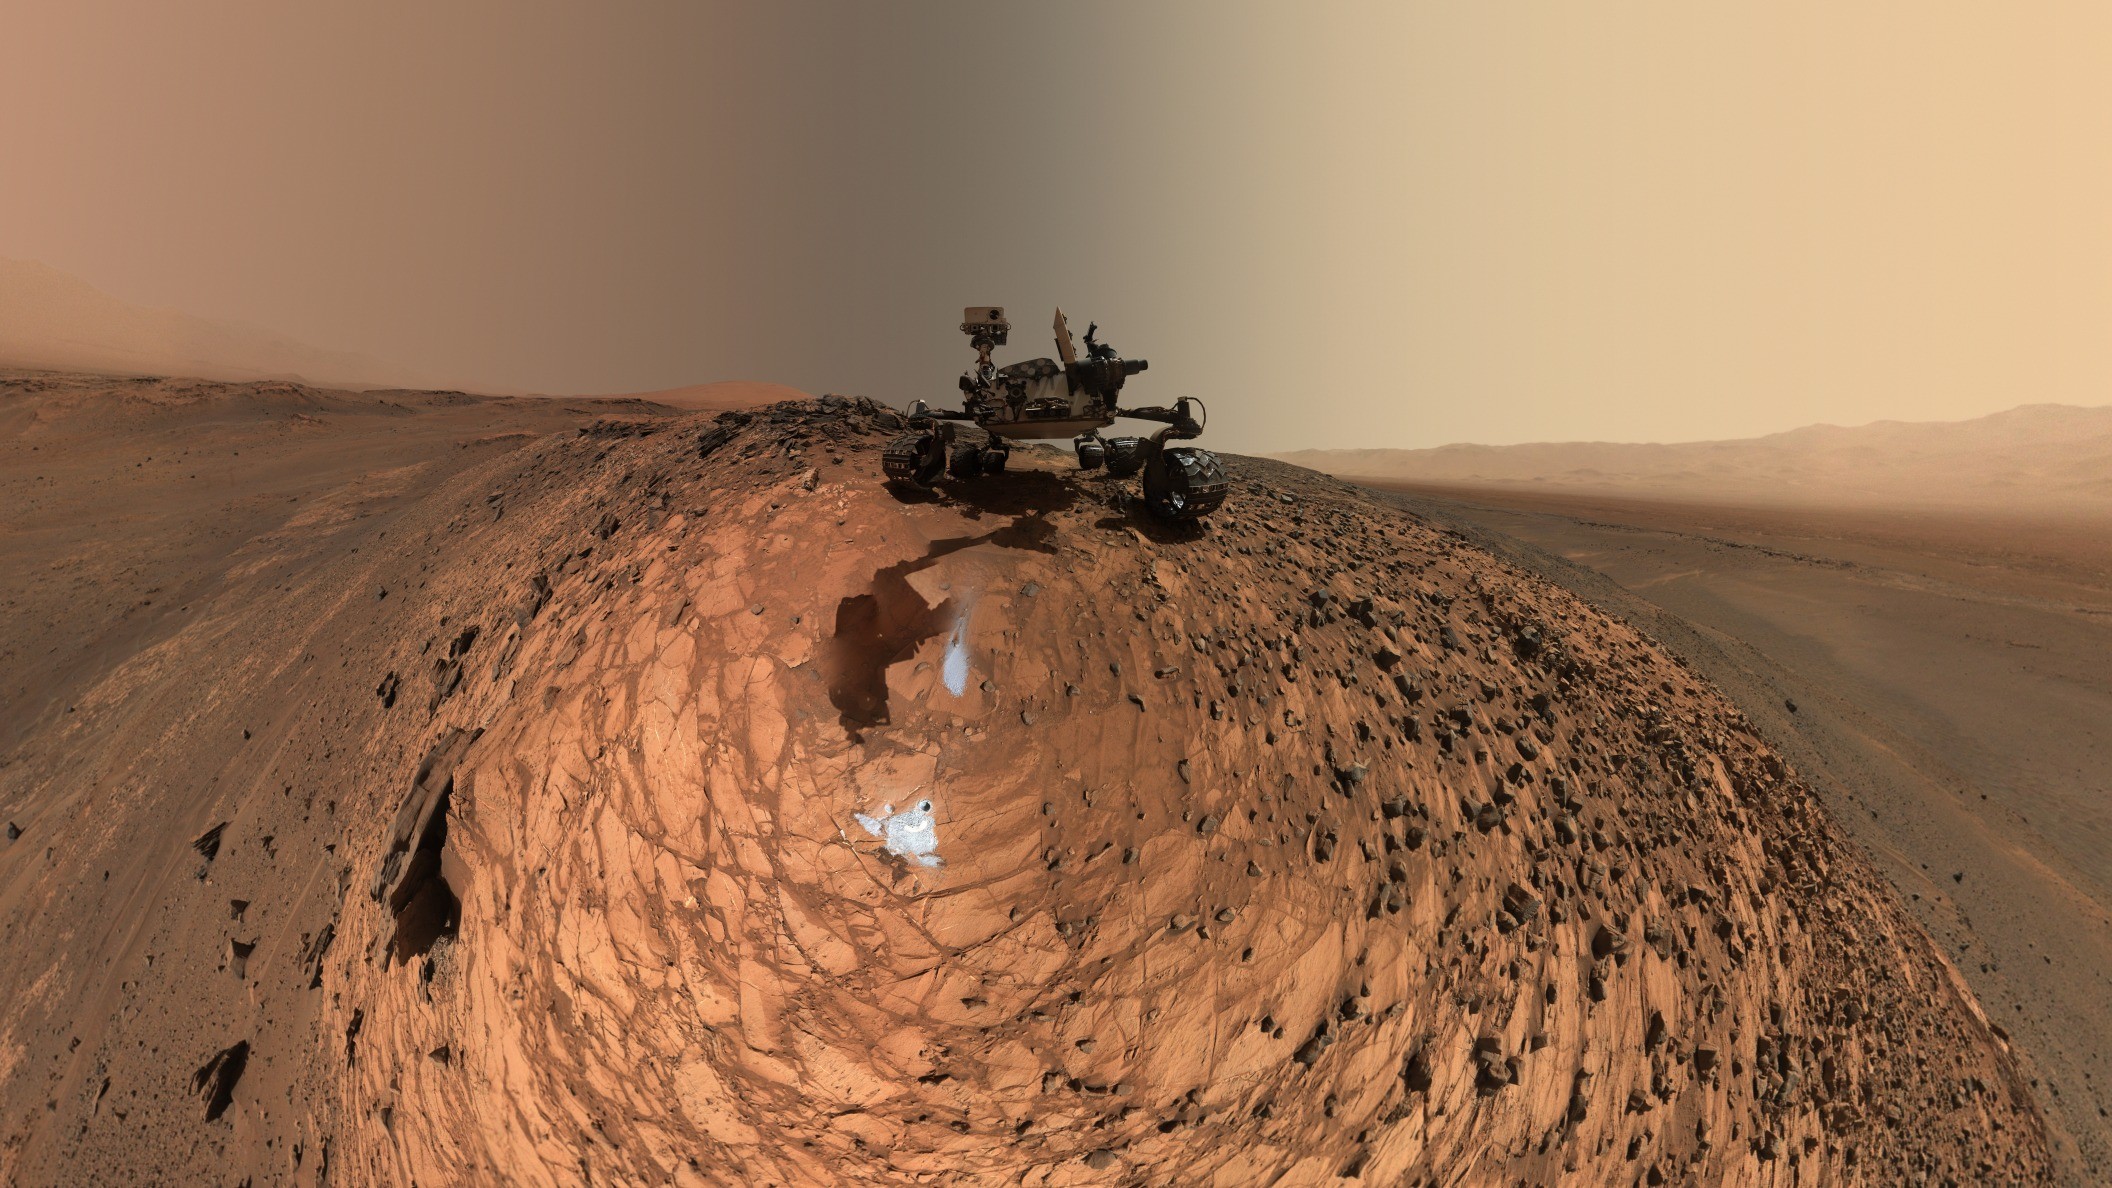 2112x1188 Mars PathfinderSojourner rover mission Spacecom NASA